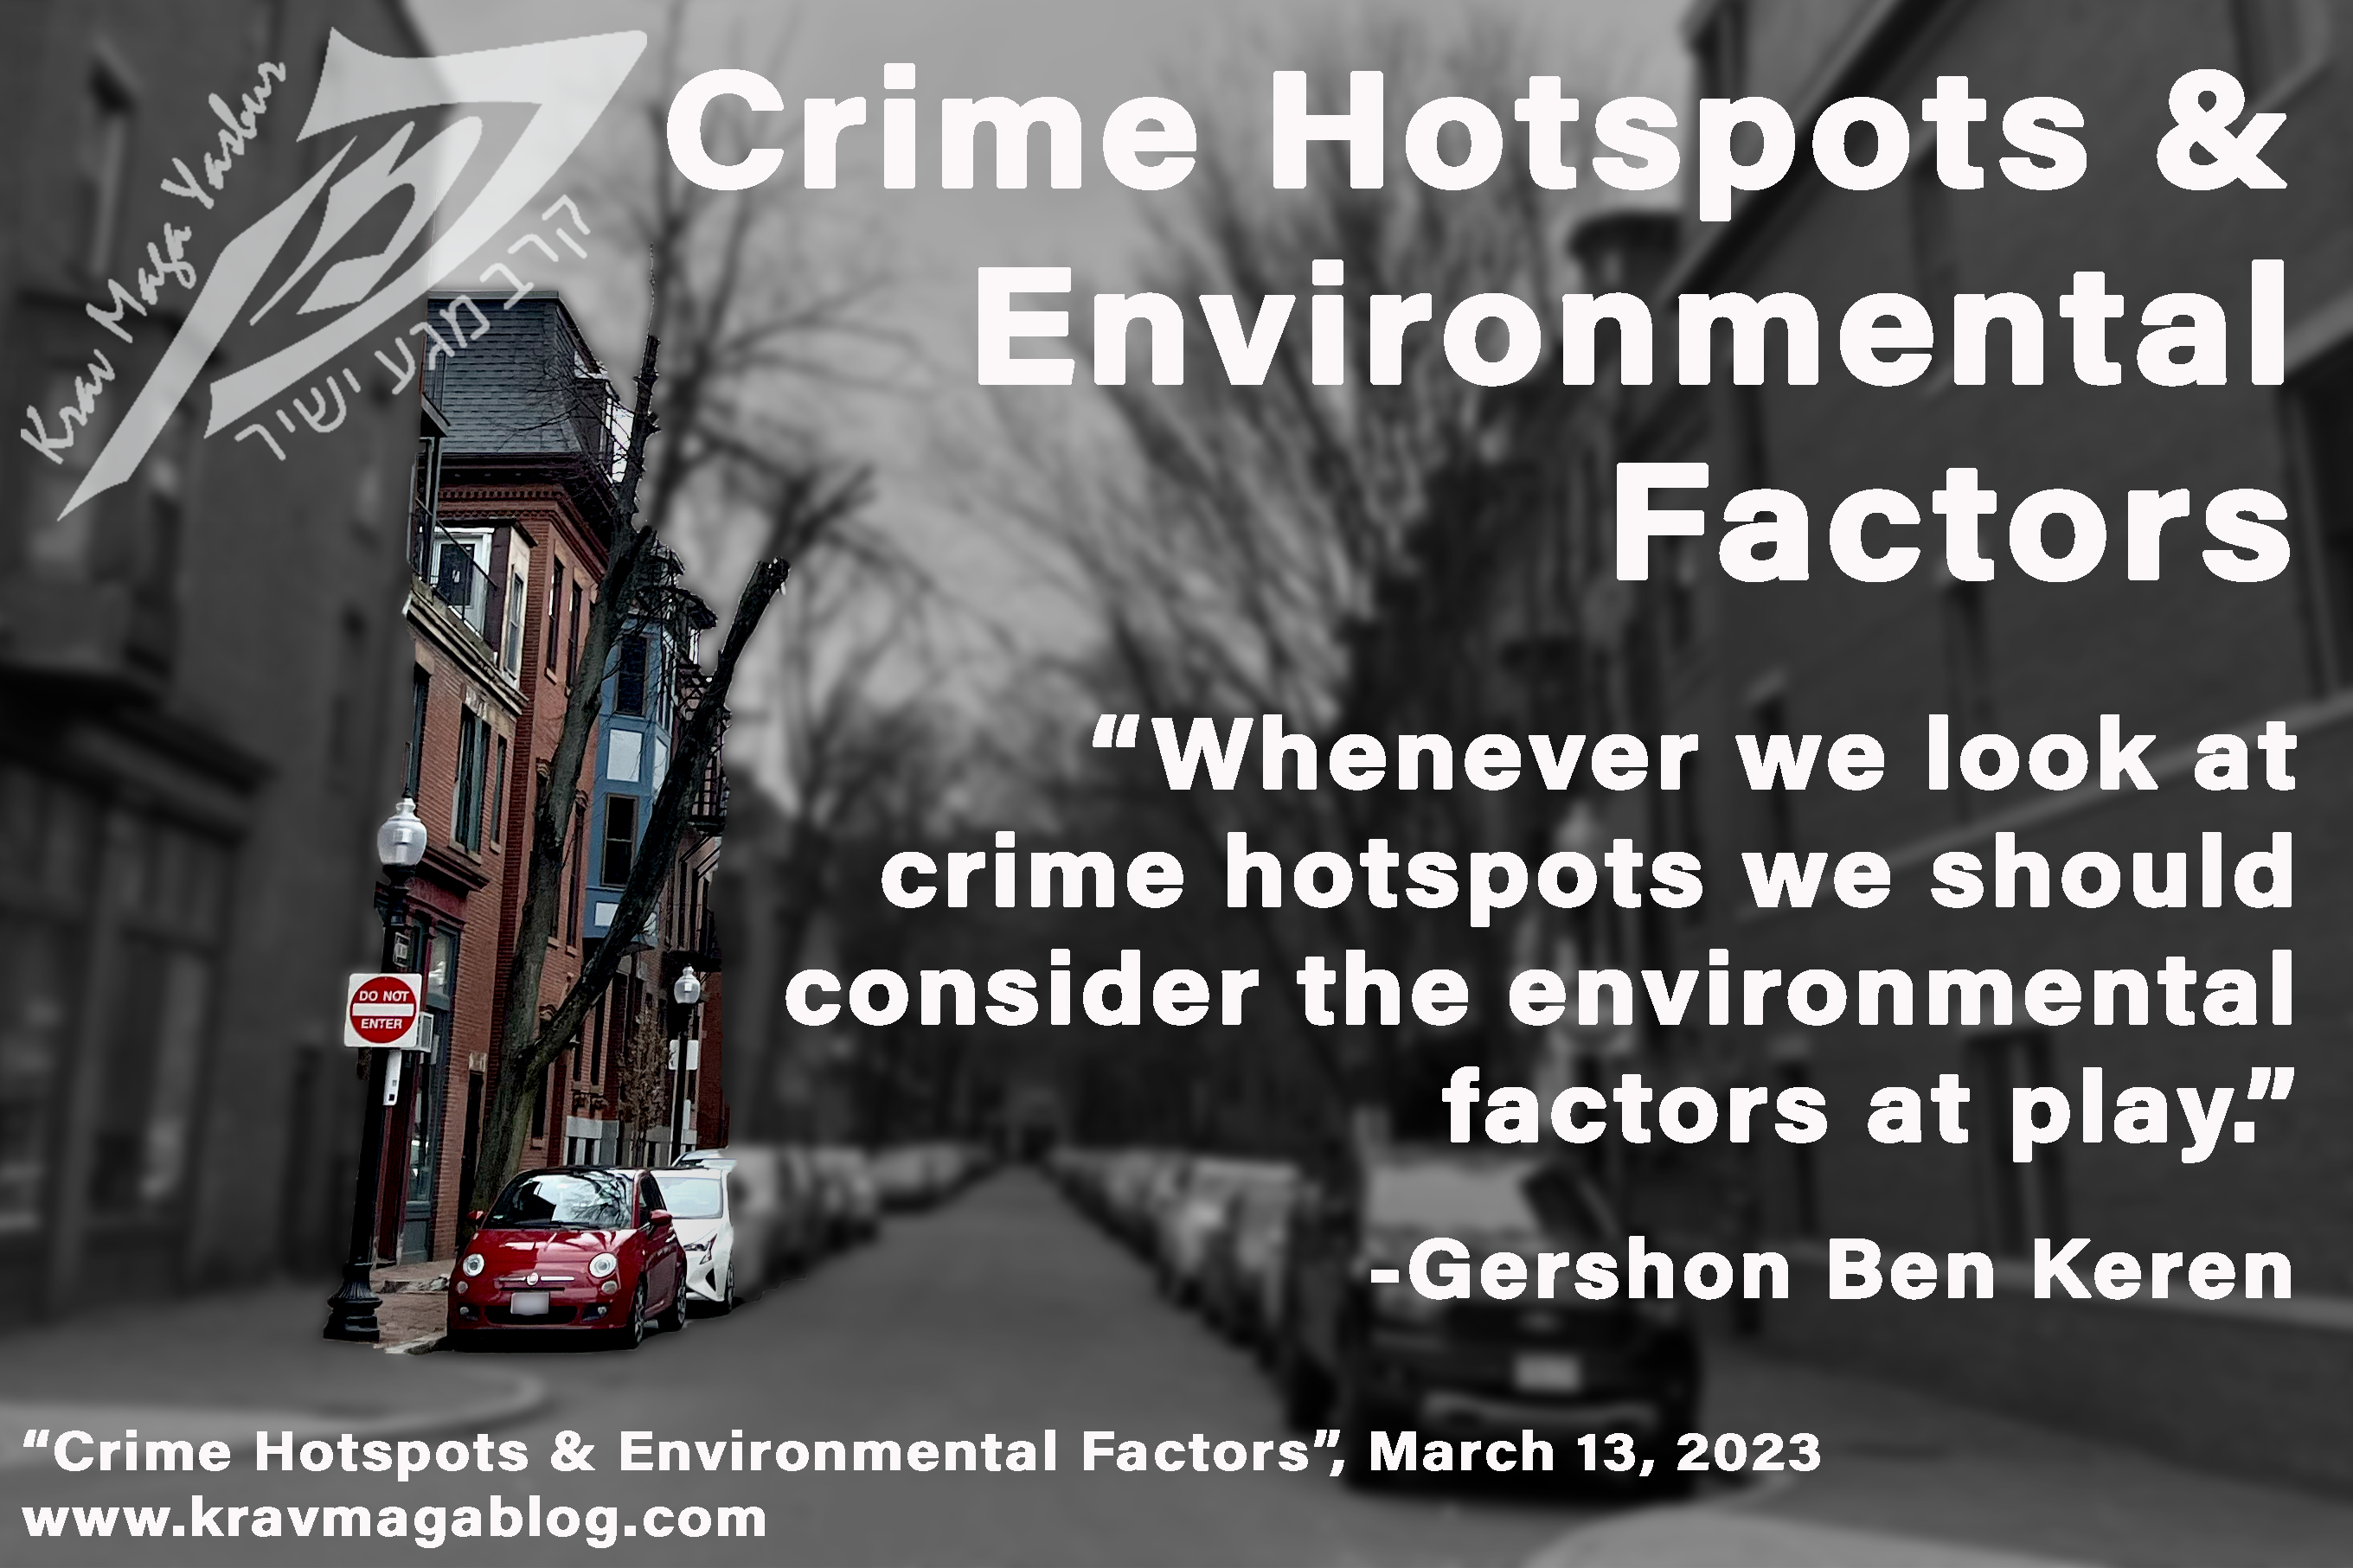 Boston Crime Hotspots - Helen Street, Dorchester - & Environmental Factors